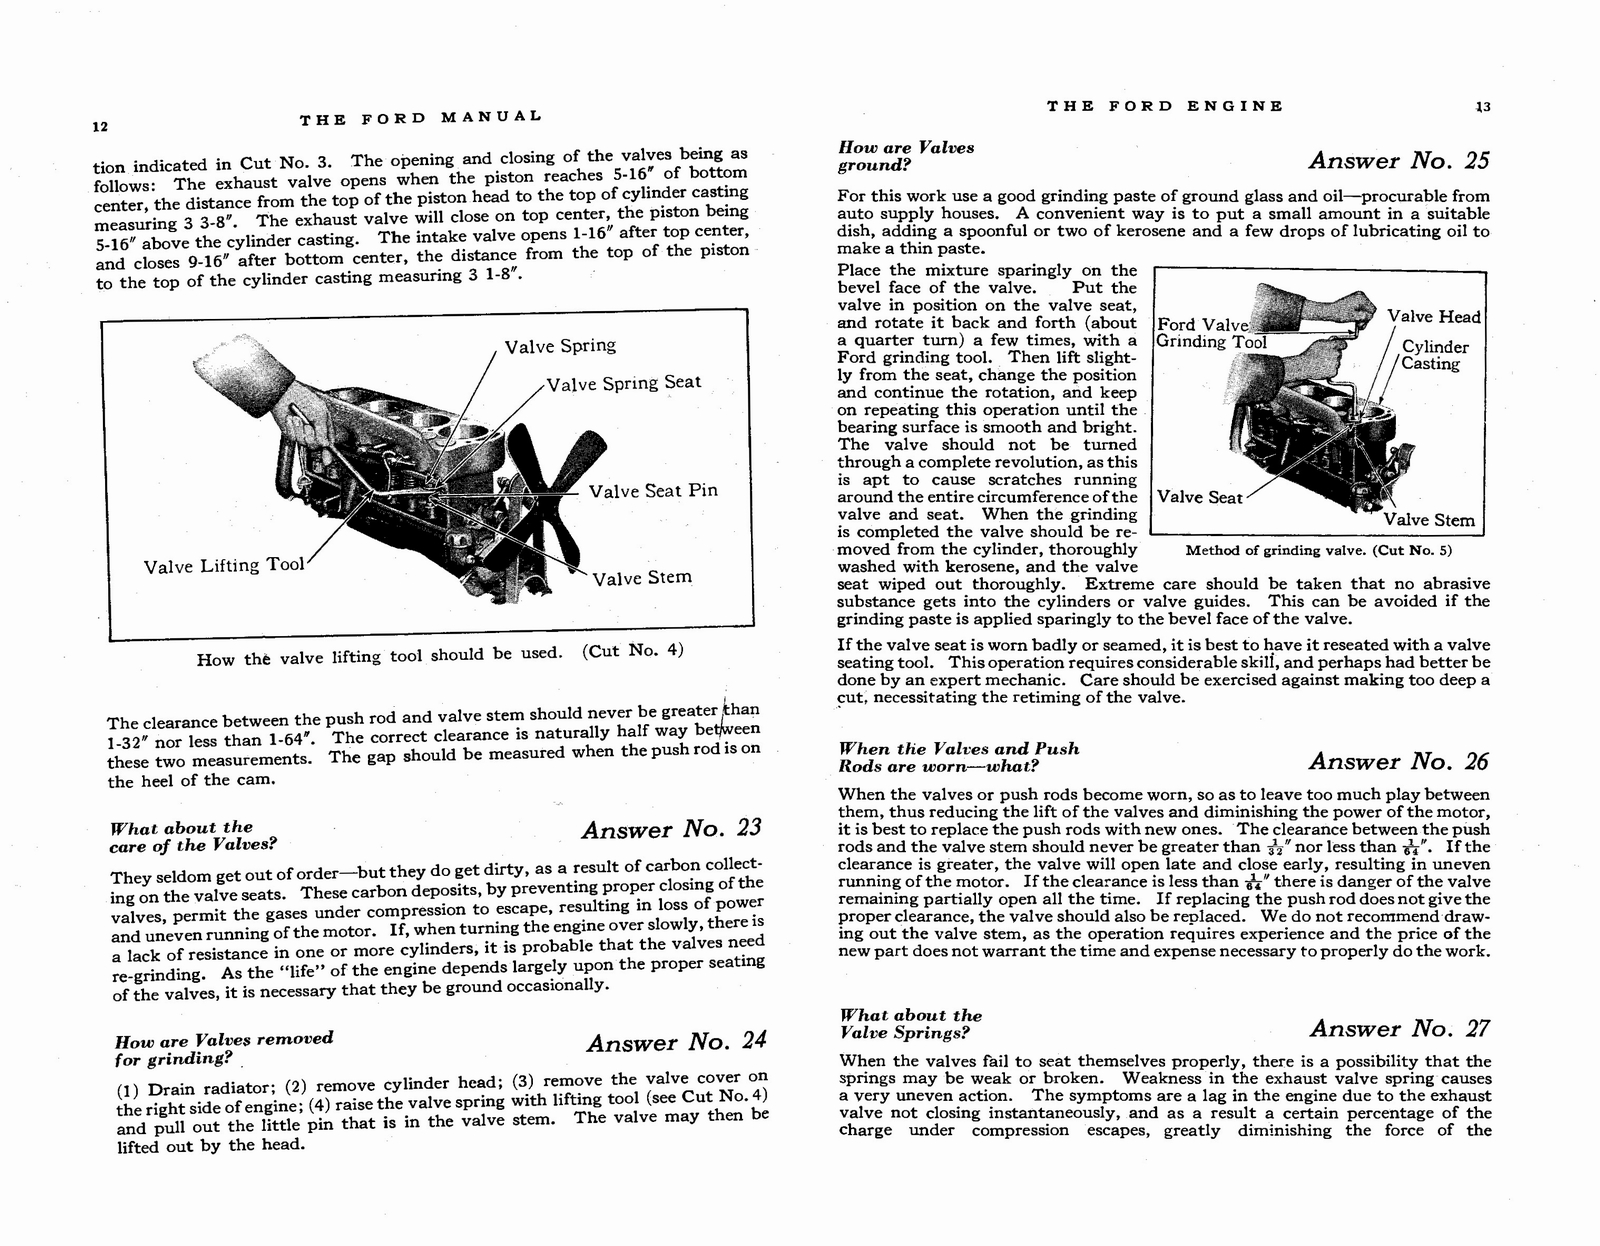 n_1925 Ford Owners Manual-12-13.jpg